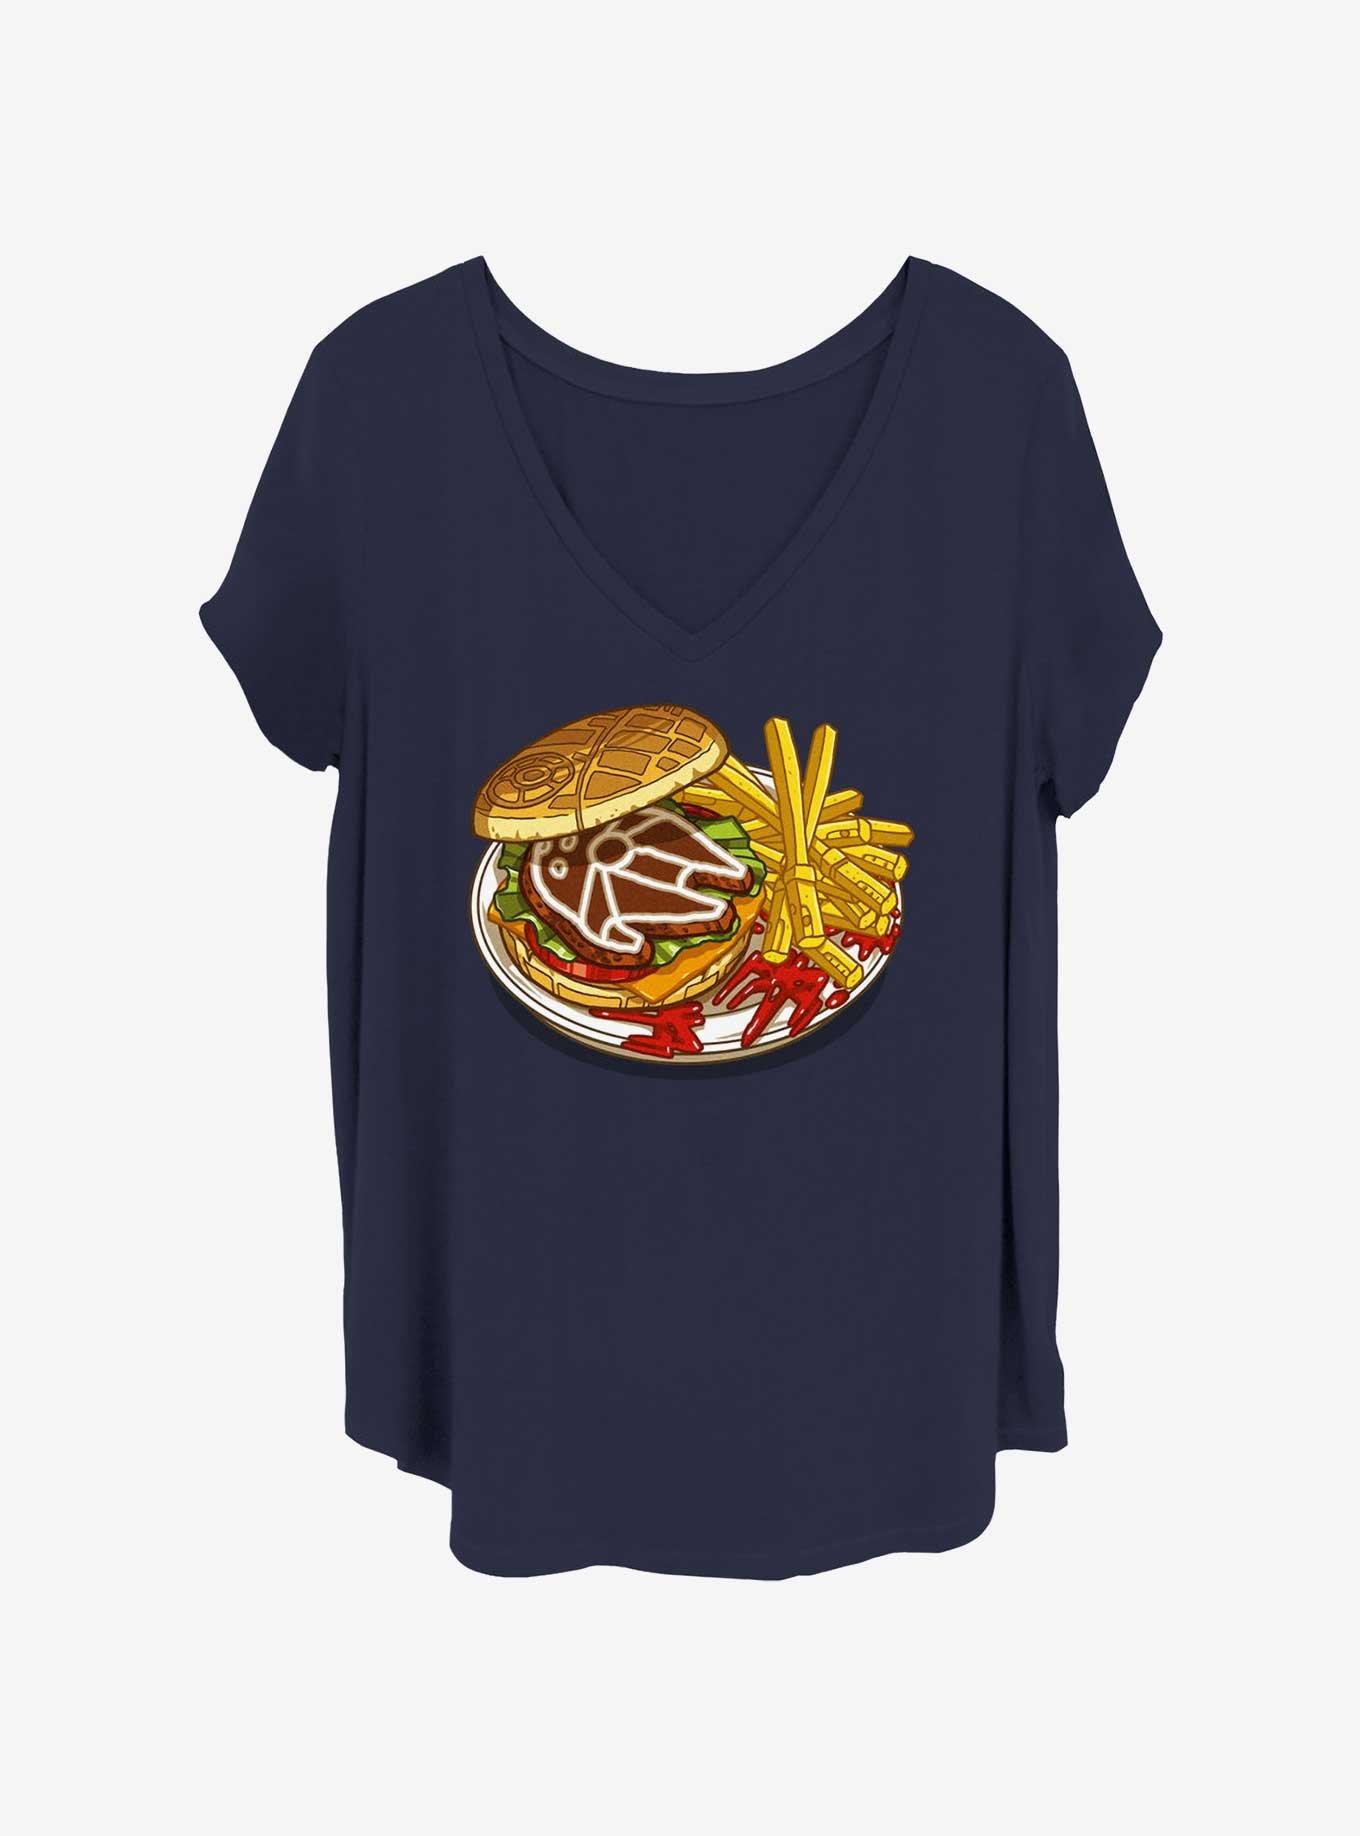 Star Wars Burger Plate Girls T-Shirt Plus Size, NAVY, hi-res